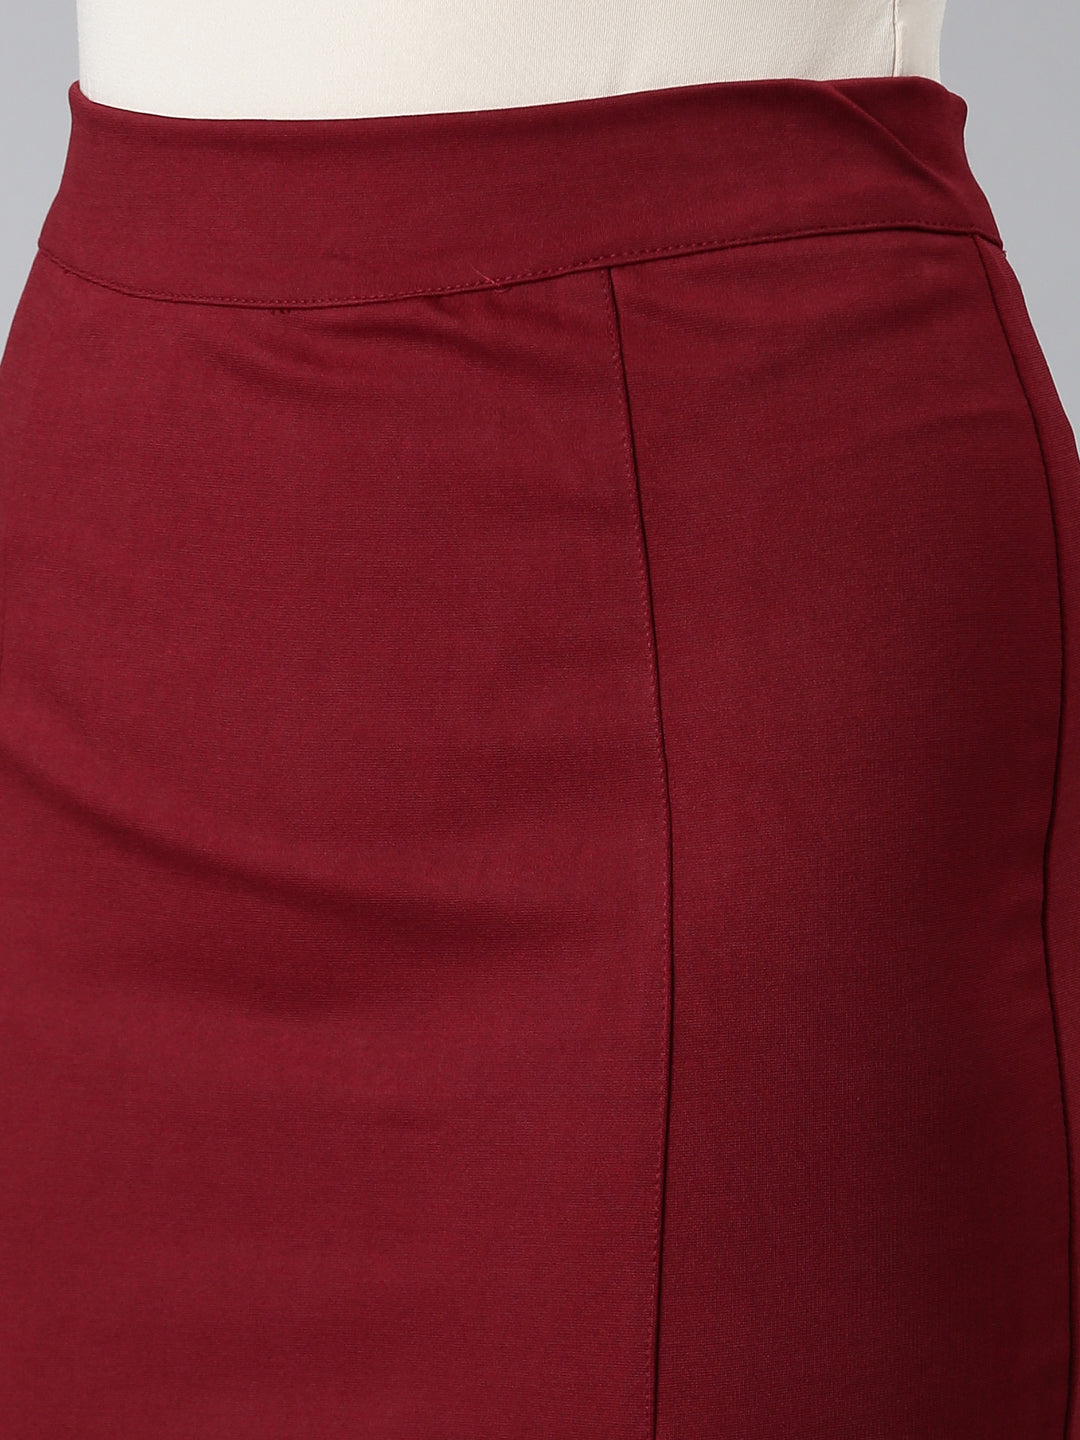 Women Maroon Solid Pencil Skirt